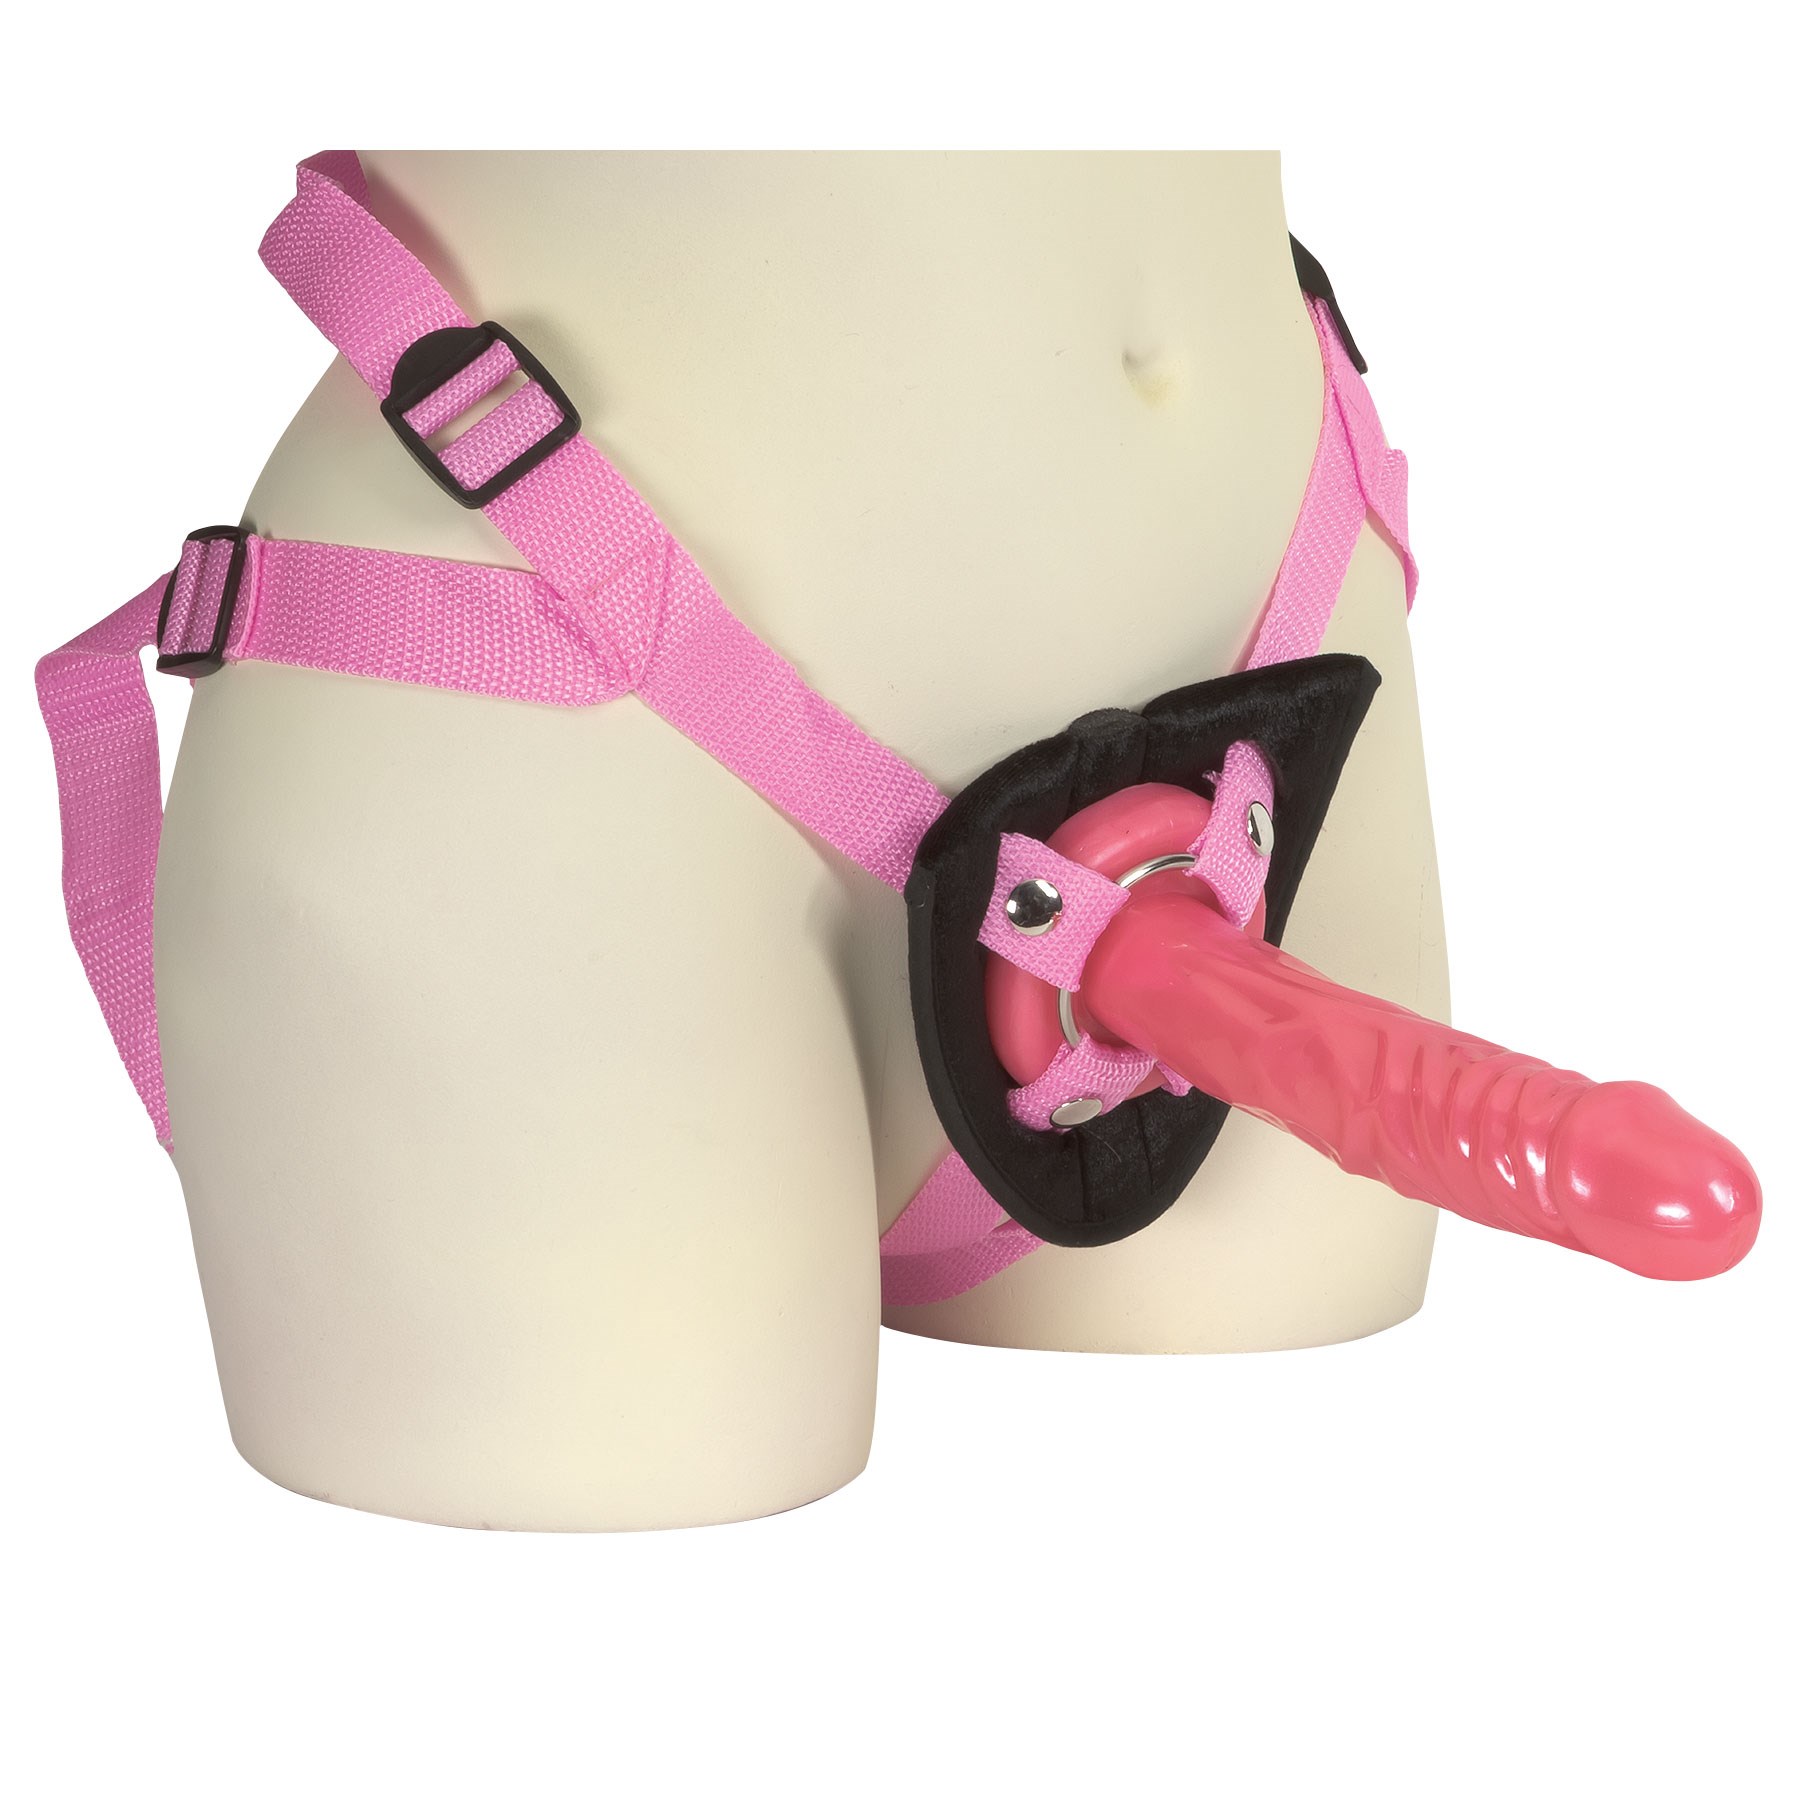 Pink Harness With Stud on display